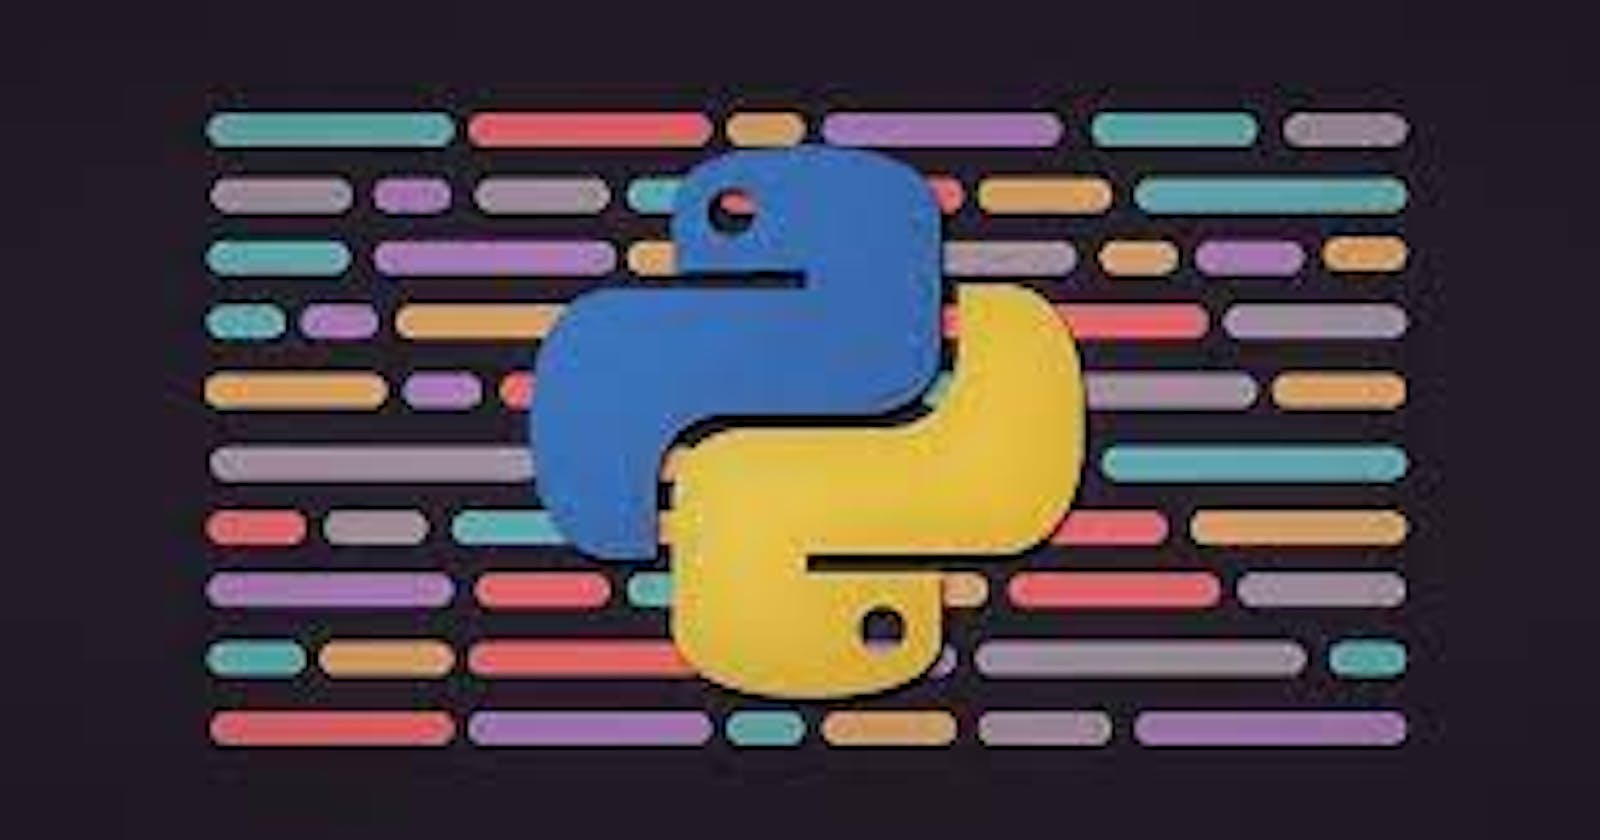 Day 9. Python Use Cases For DevOps